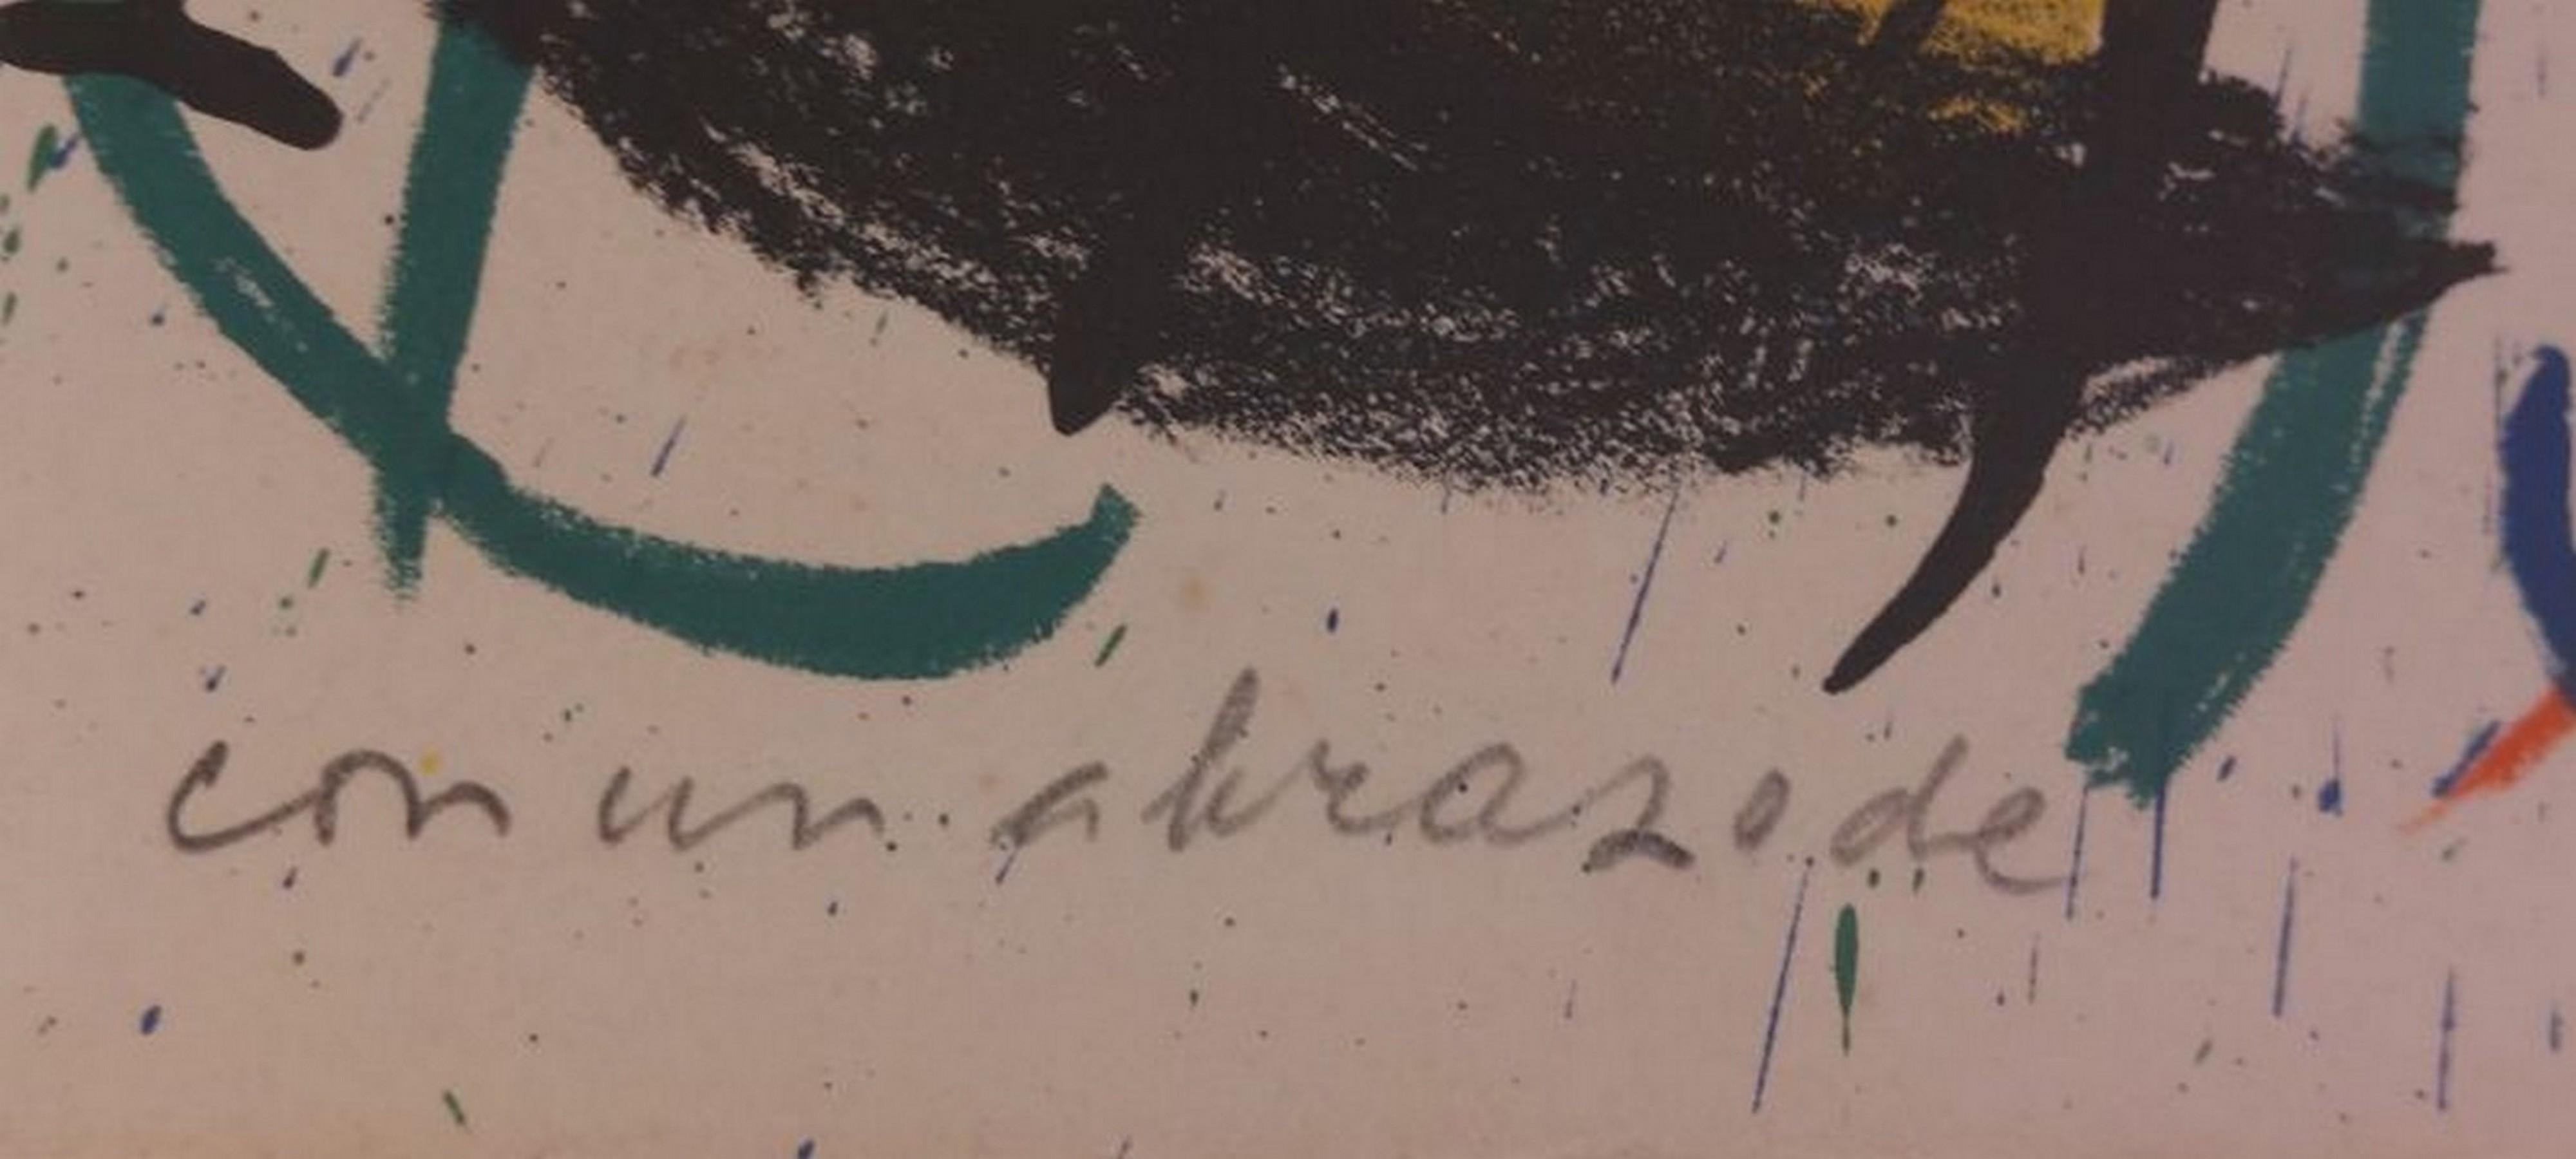 Exposition XXIIe Salon de Mai  - Print de Joan Miró